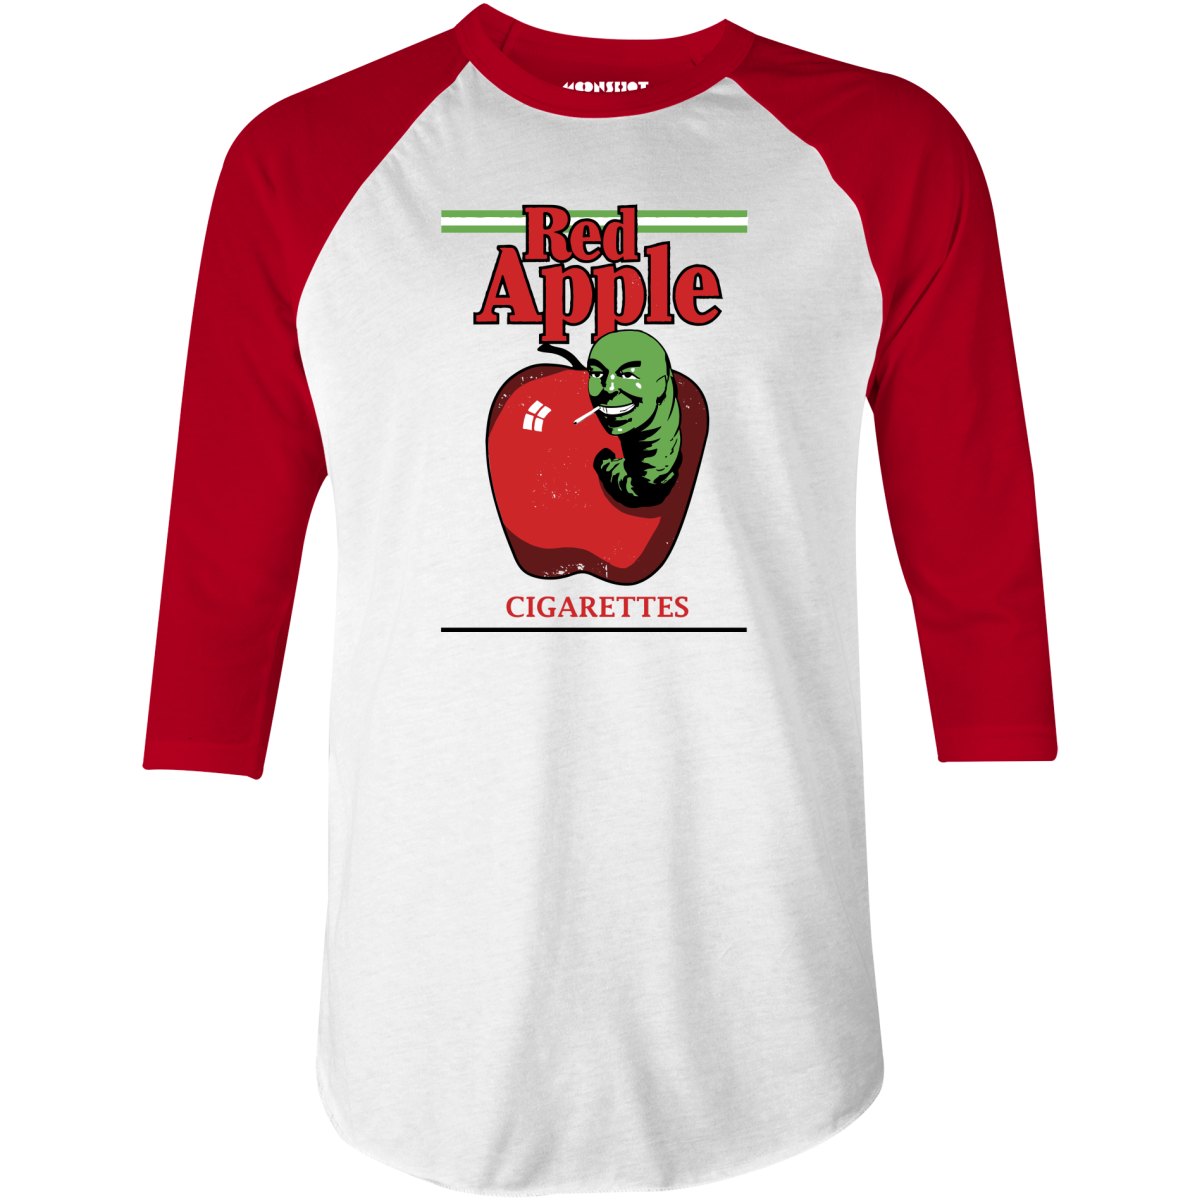 Red Apple Cigarettes - 3/4 Sleeve Raglan T-Shirt